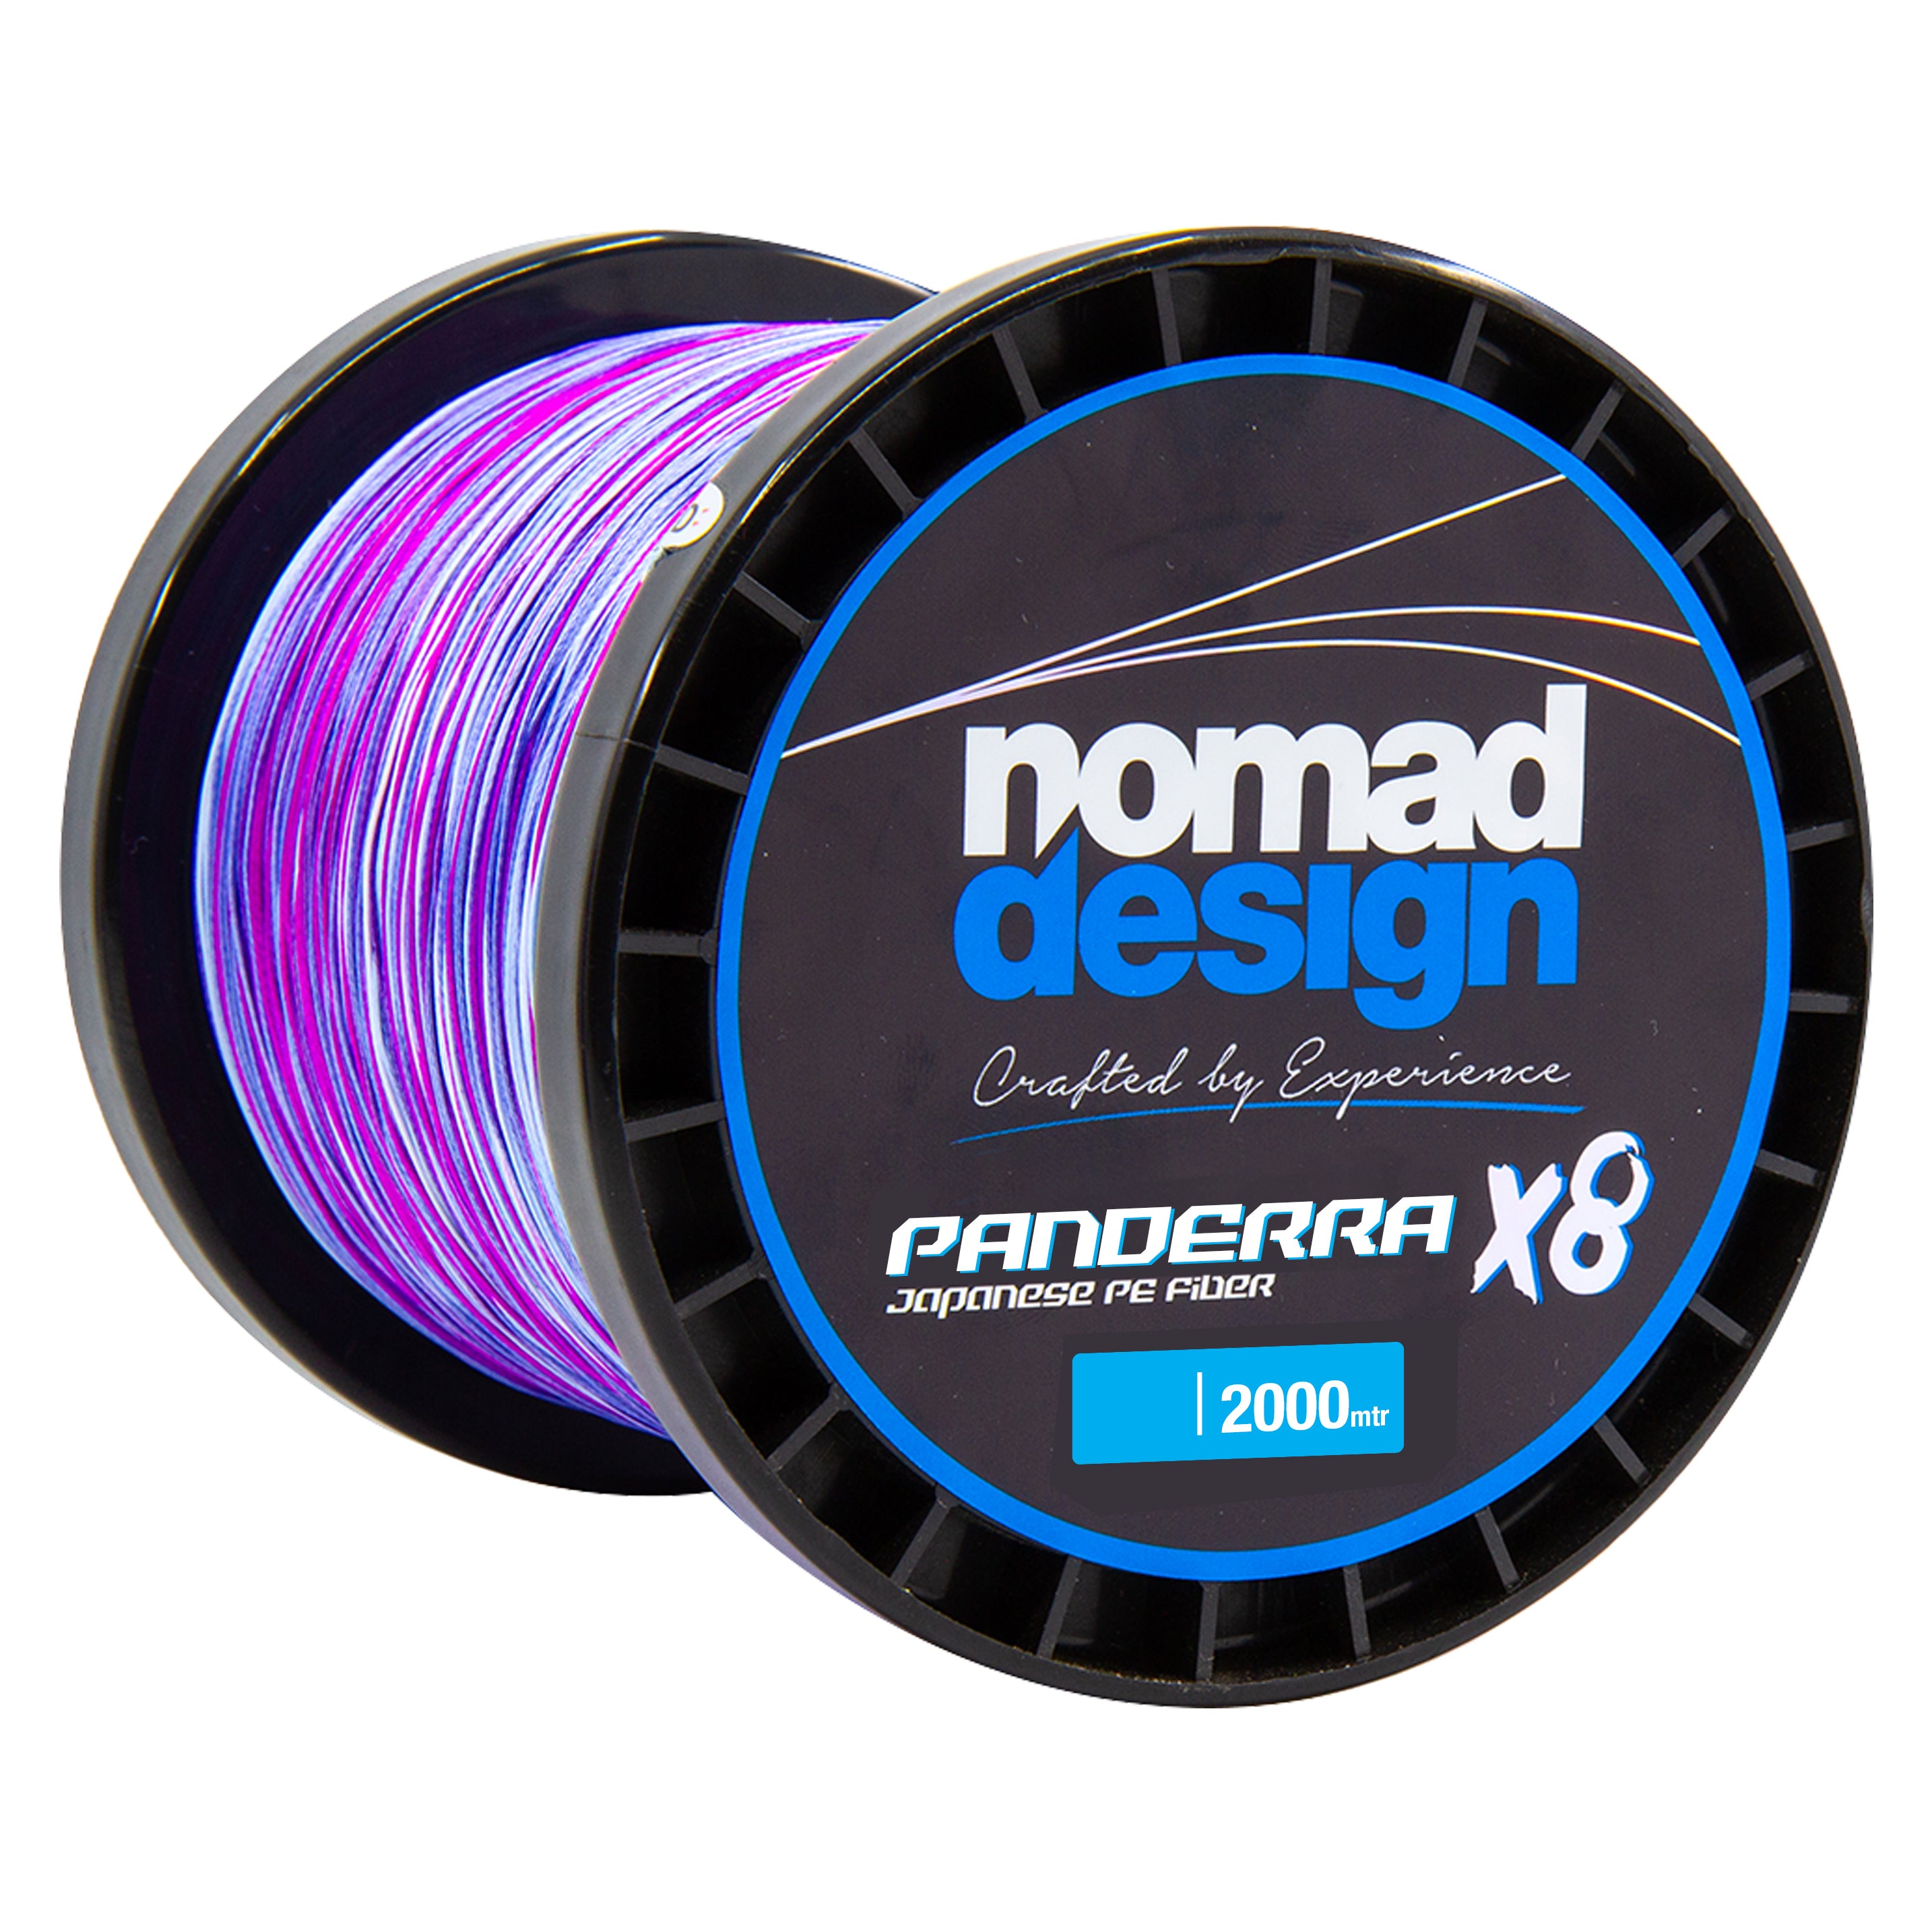 Nomad Design Panderra 8x 200m Multi Colour Braid Fishing Line #8lb